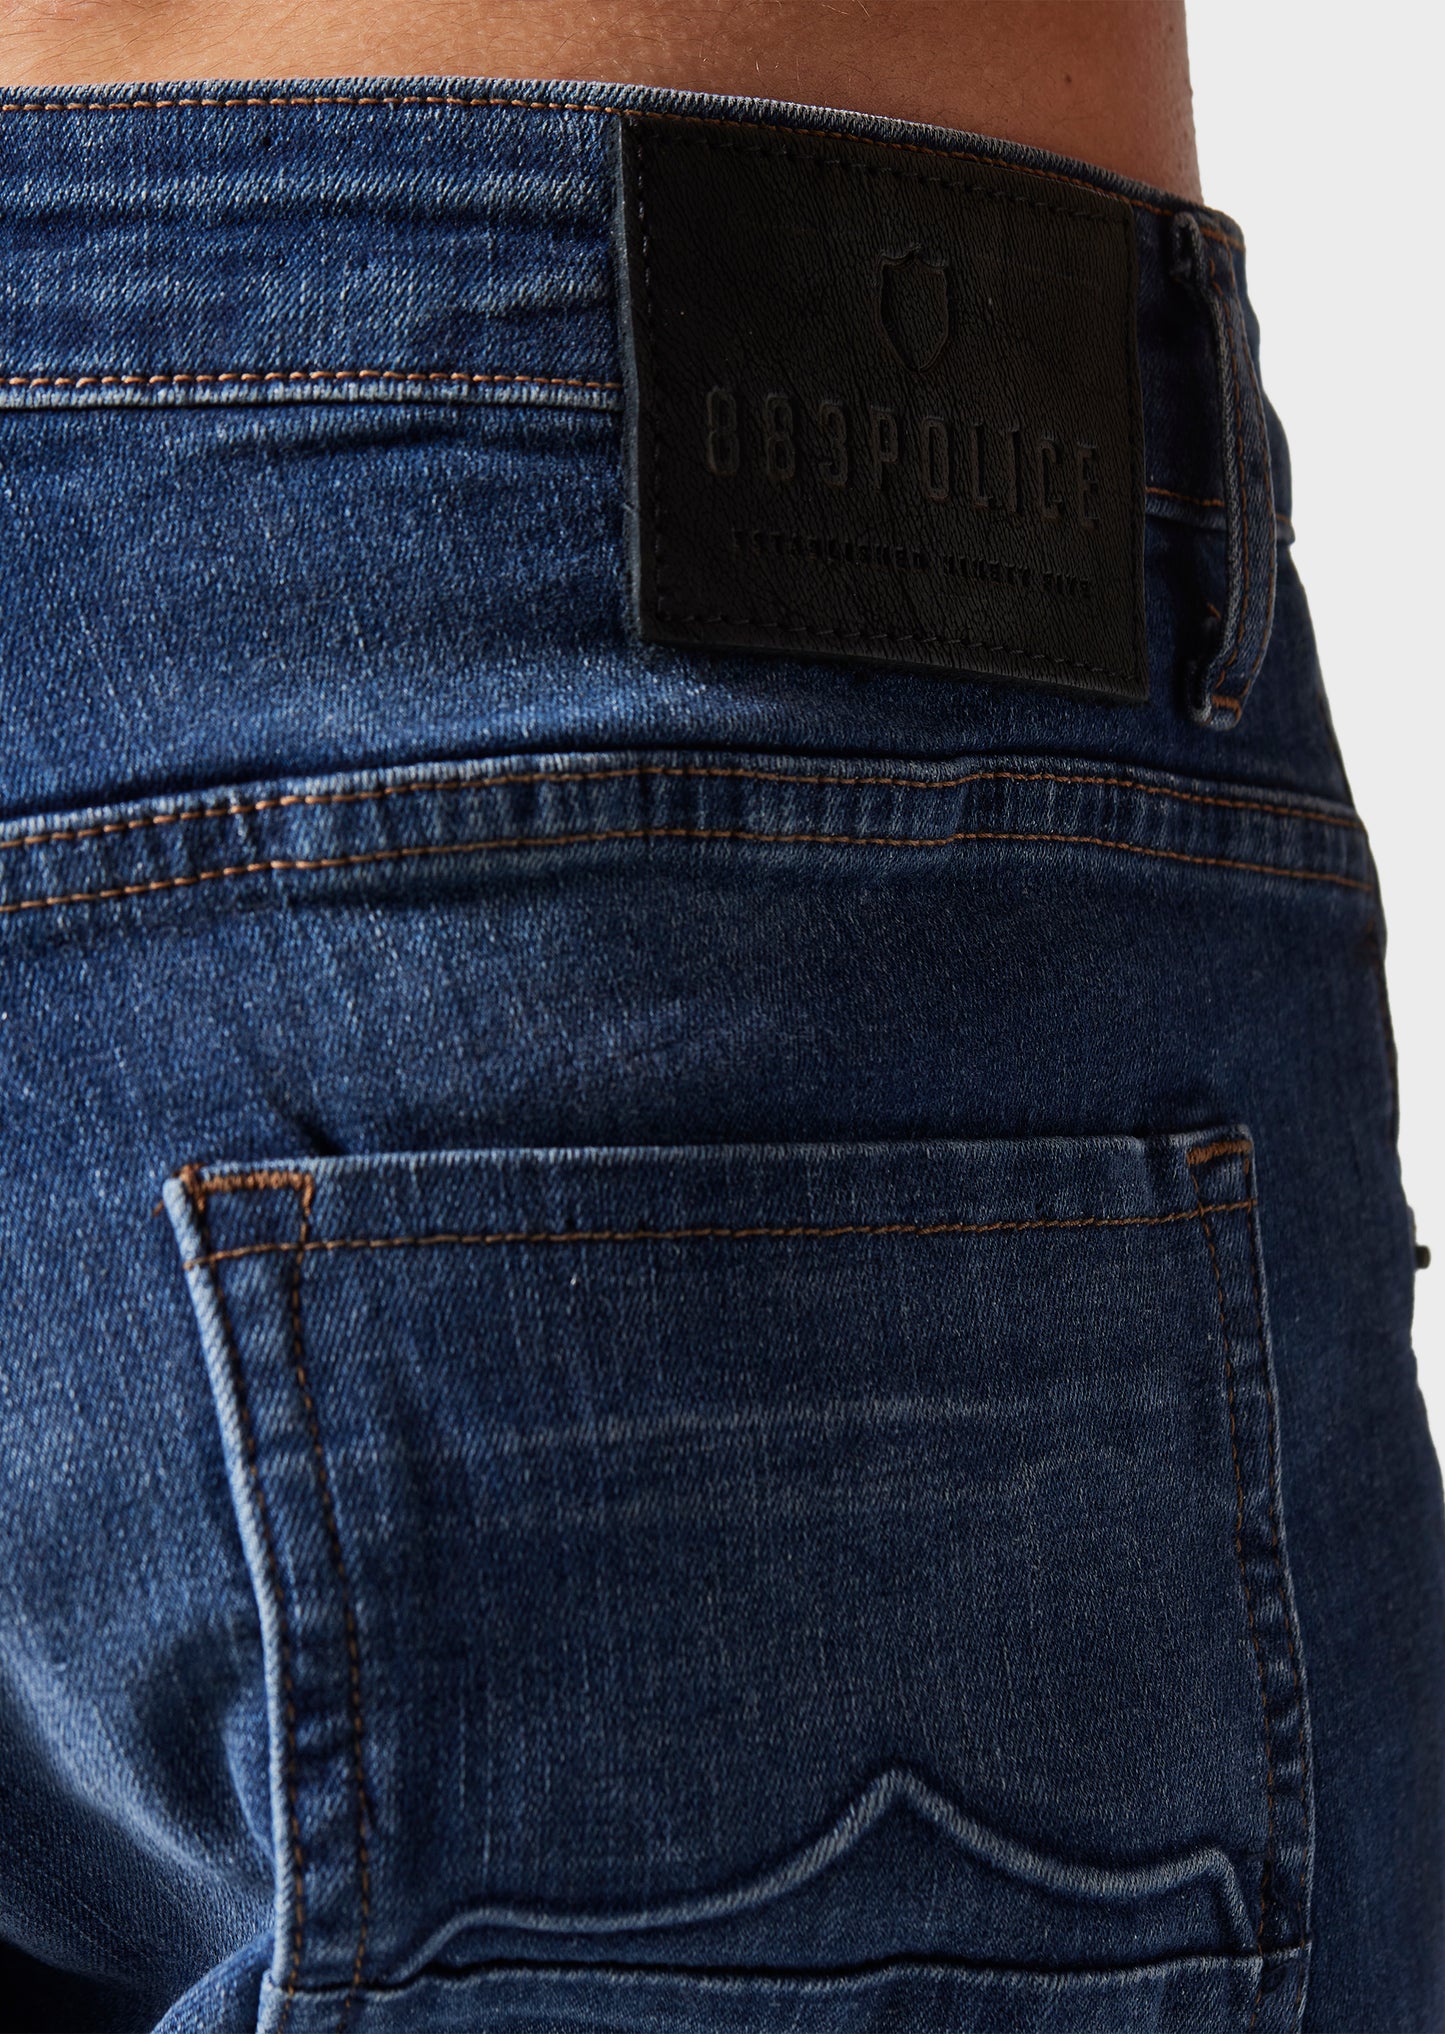 Cassady ORT 959W Blue Regular Fit Jeans